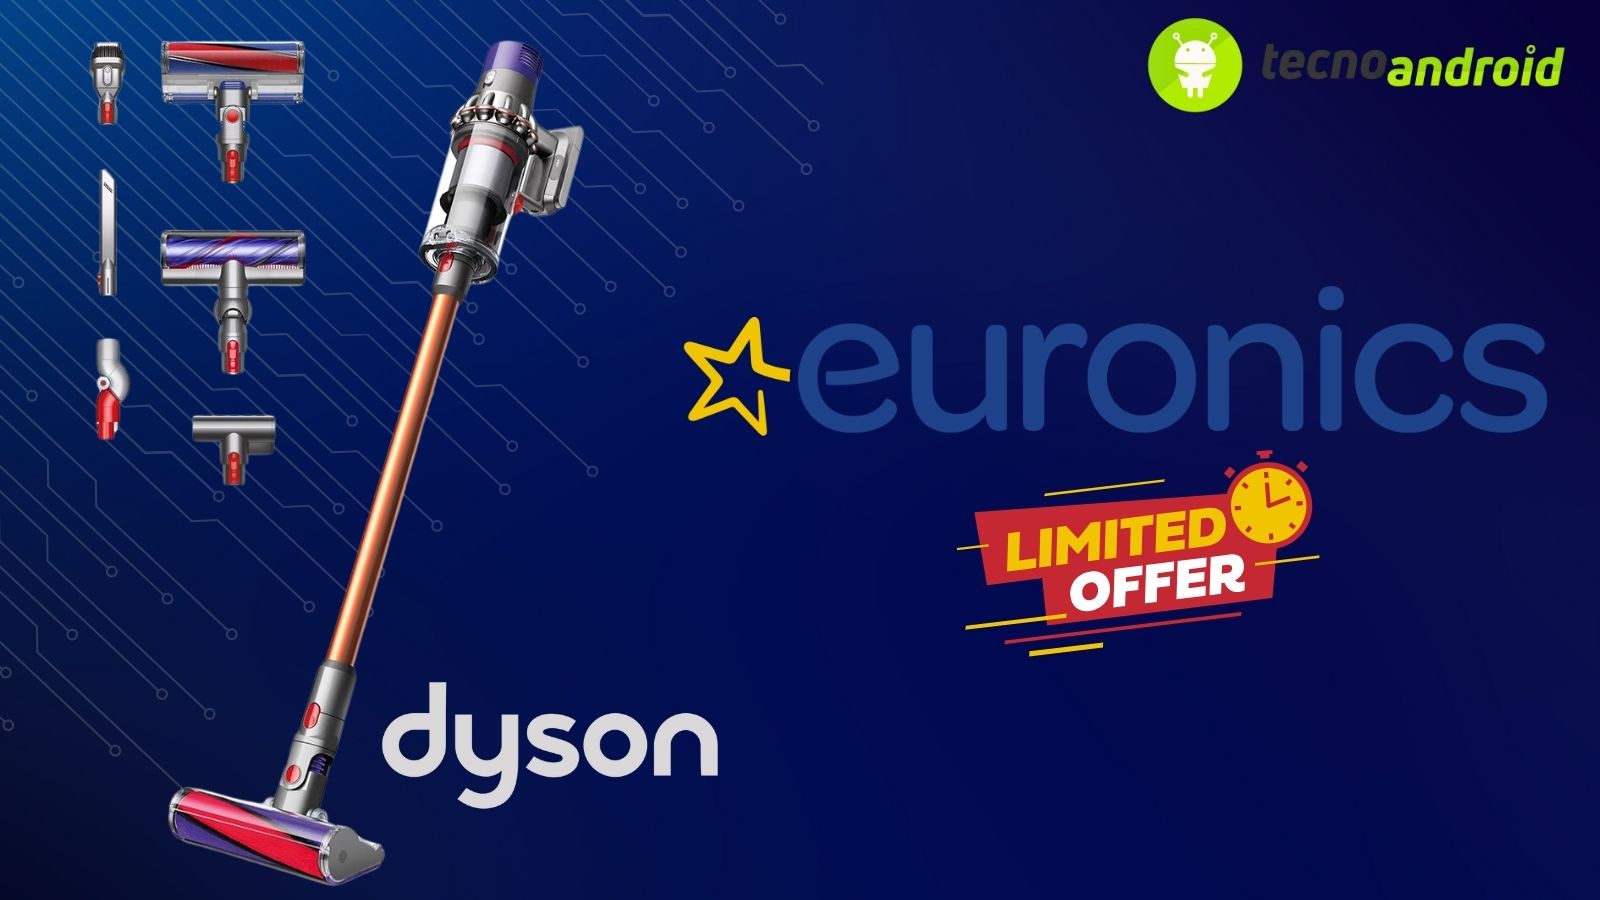 Offerta Euronics: Dyson V10 Absolute a 399€, risparmio di 200€!